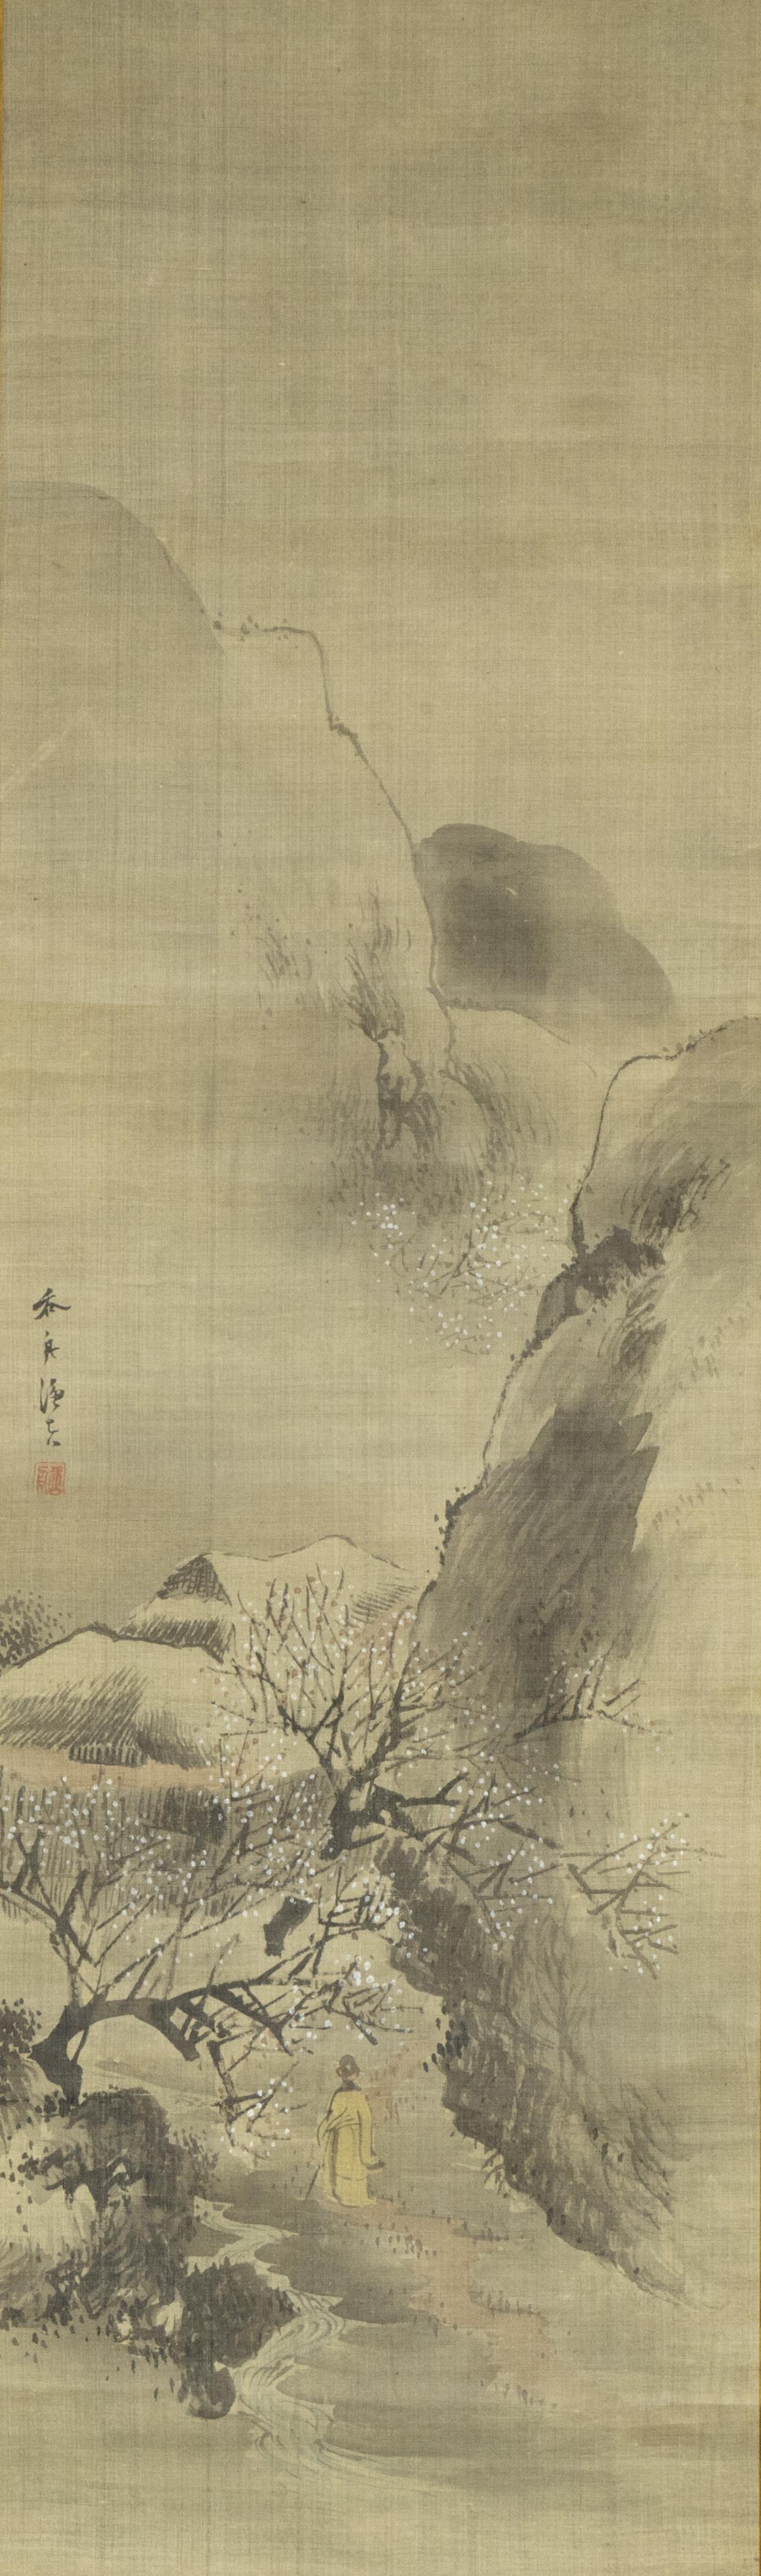 Ôhara Donshû (1792 - 1857) De geur van pruimen in de nacht
Rolschildering / scroll op zijde, houten rollers, in houten cassette. Provenance: Oranda Jin. A/B 98.8 x 29.4 / 184 x 41.5 cm
98.8 x 29.4 / 184 x 41.5 cm
 